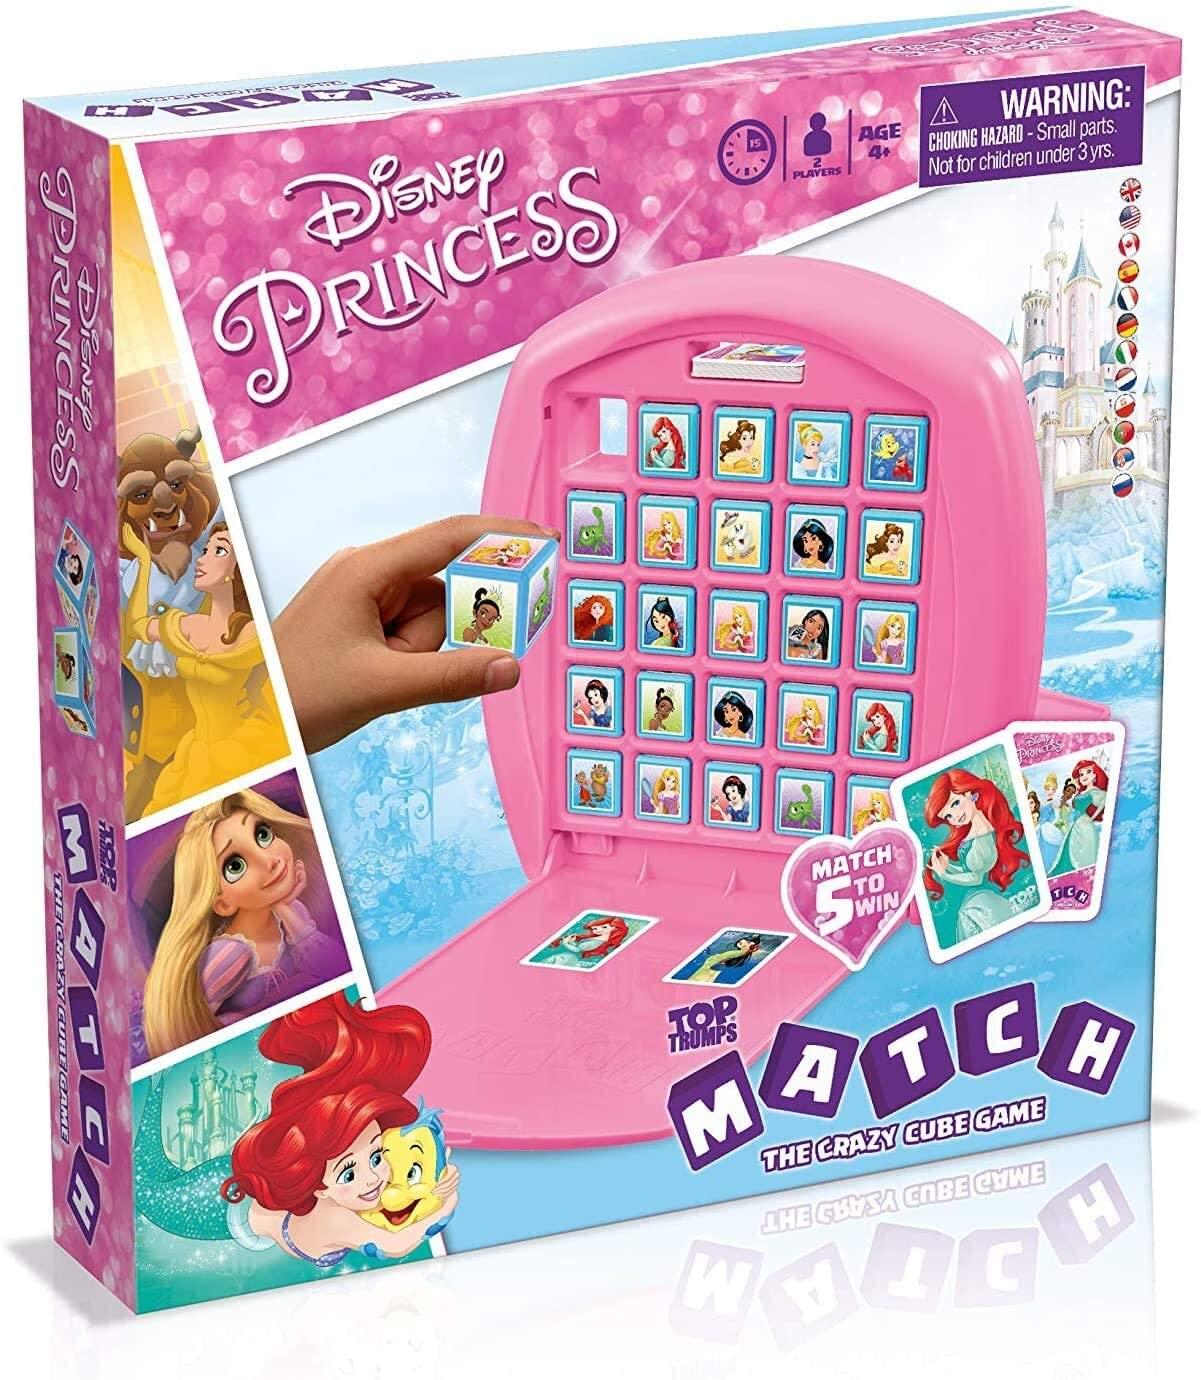 Disney Princess Top Trumps Match | The Crazy Cube Game